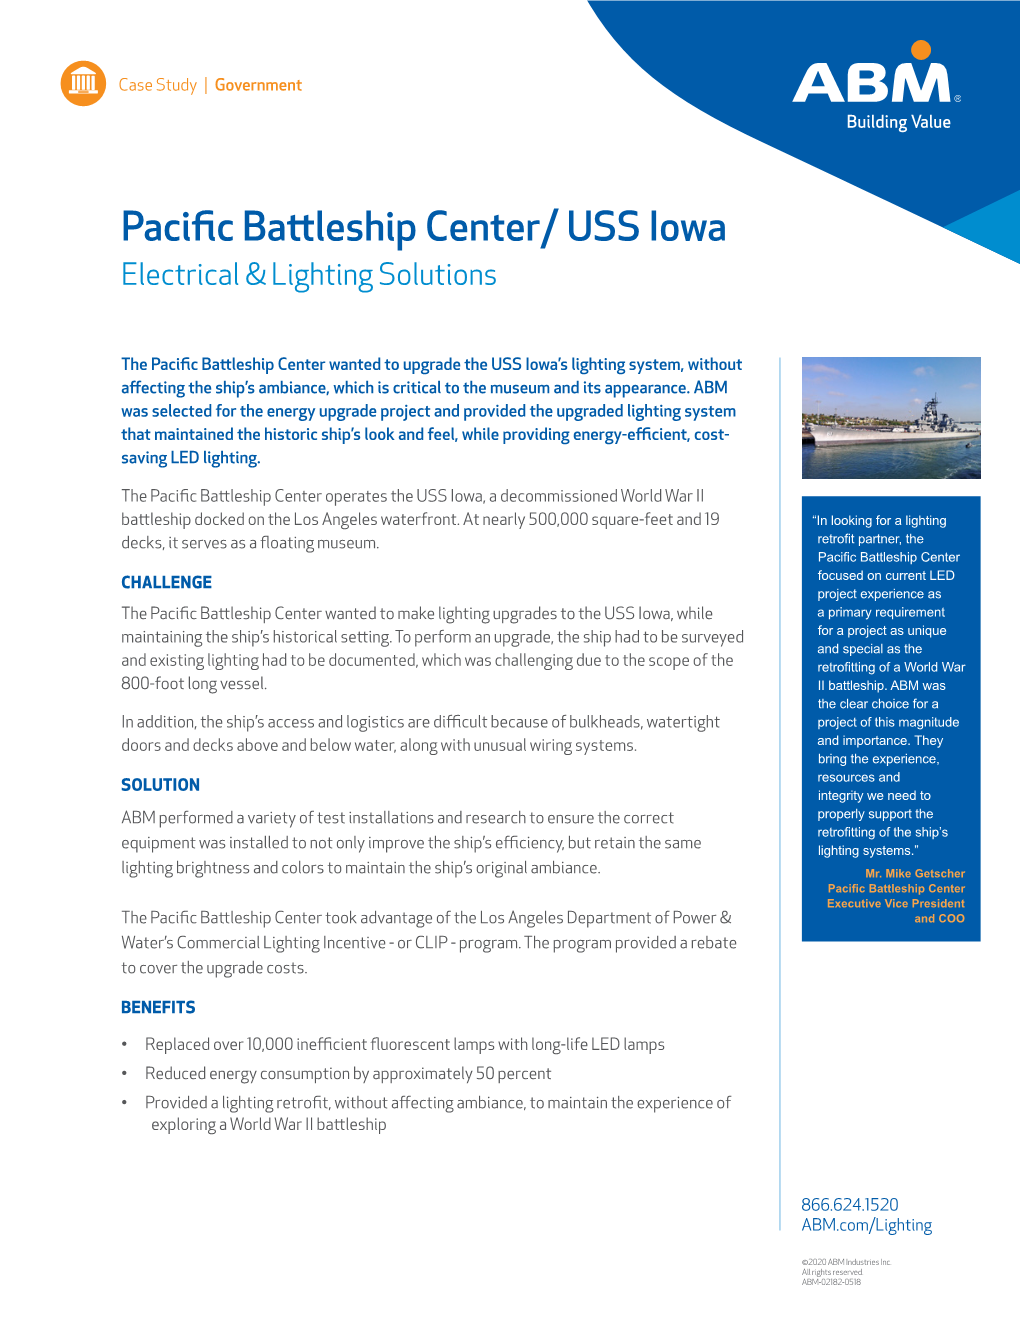 Pacific Battleship Center/ USS Iowa Electrical & Lighting Solutions